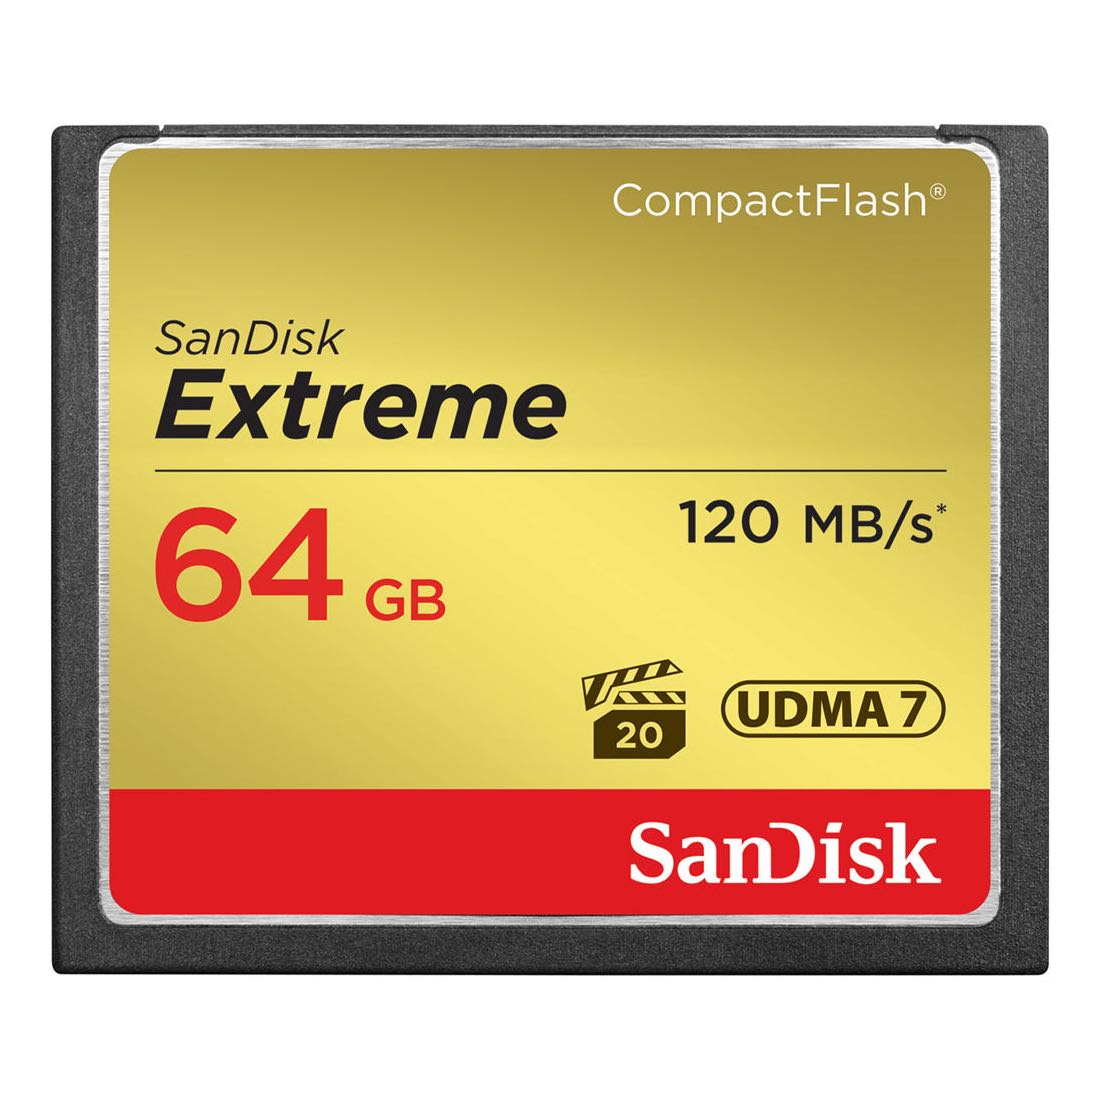 TVignette pour SanDisk 64GB Extreme CompactFlash